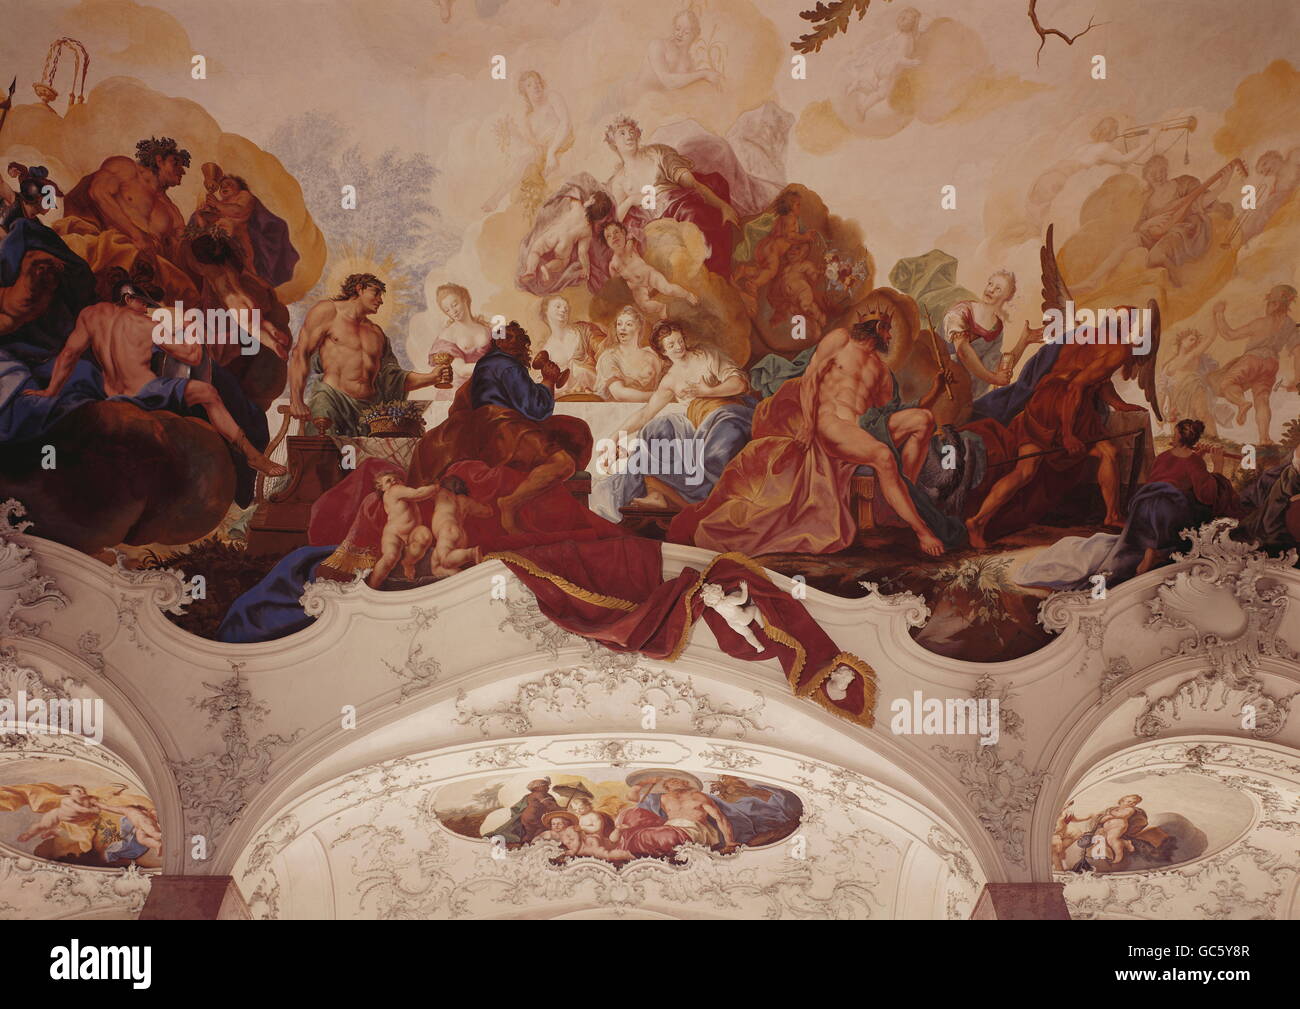 Bildende Kunst, Zick, Johann (1702-1762), fresco, "Das Goettermahl" (The Feast of the Gods), 1750, Decke, malen, Gartensaal, Residenz Würzburg, Bayern, Deutschland Stockfoto